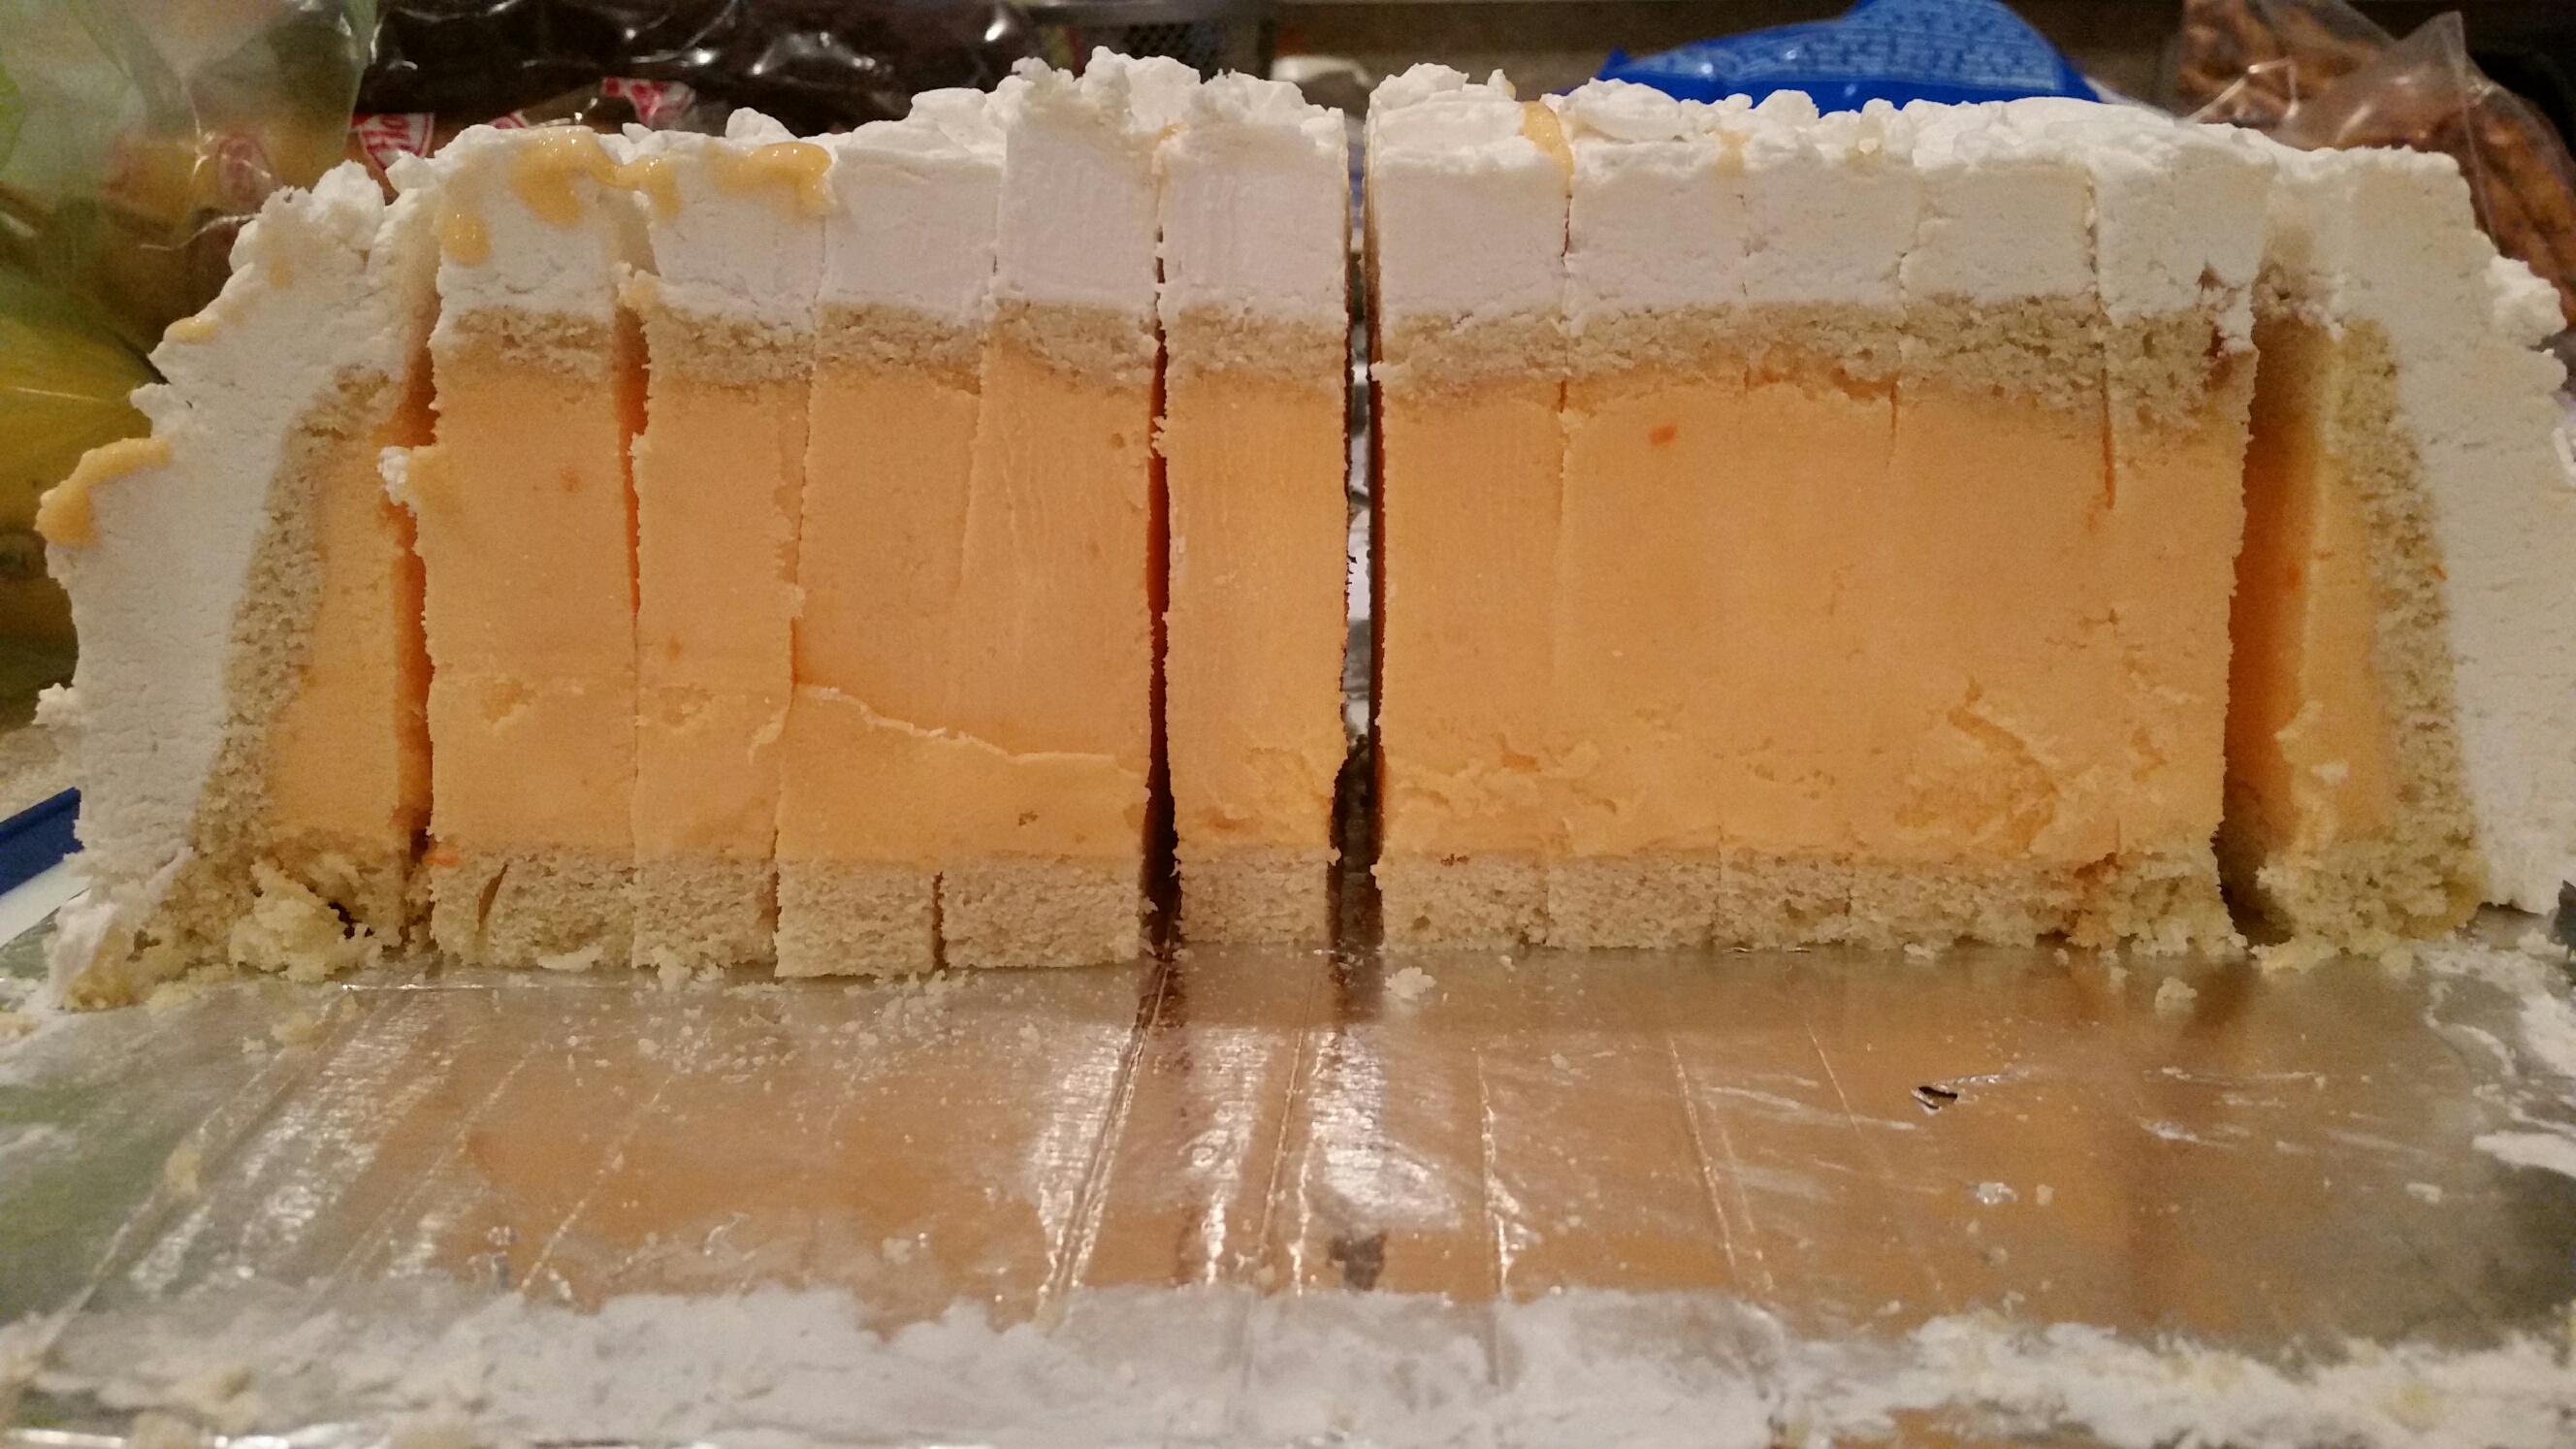 Orange Cream Cake II